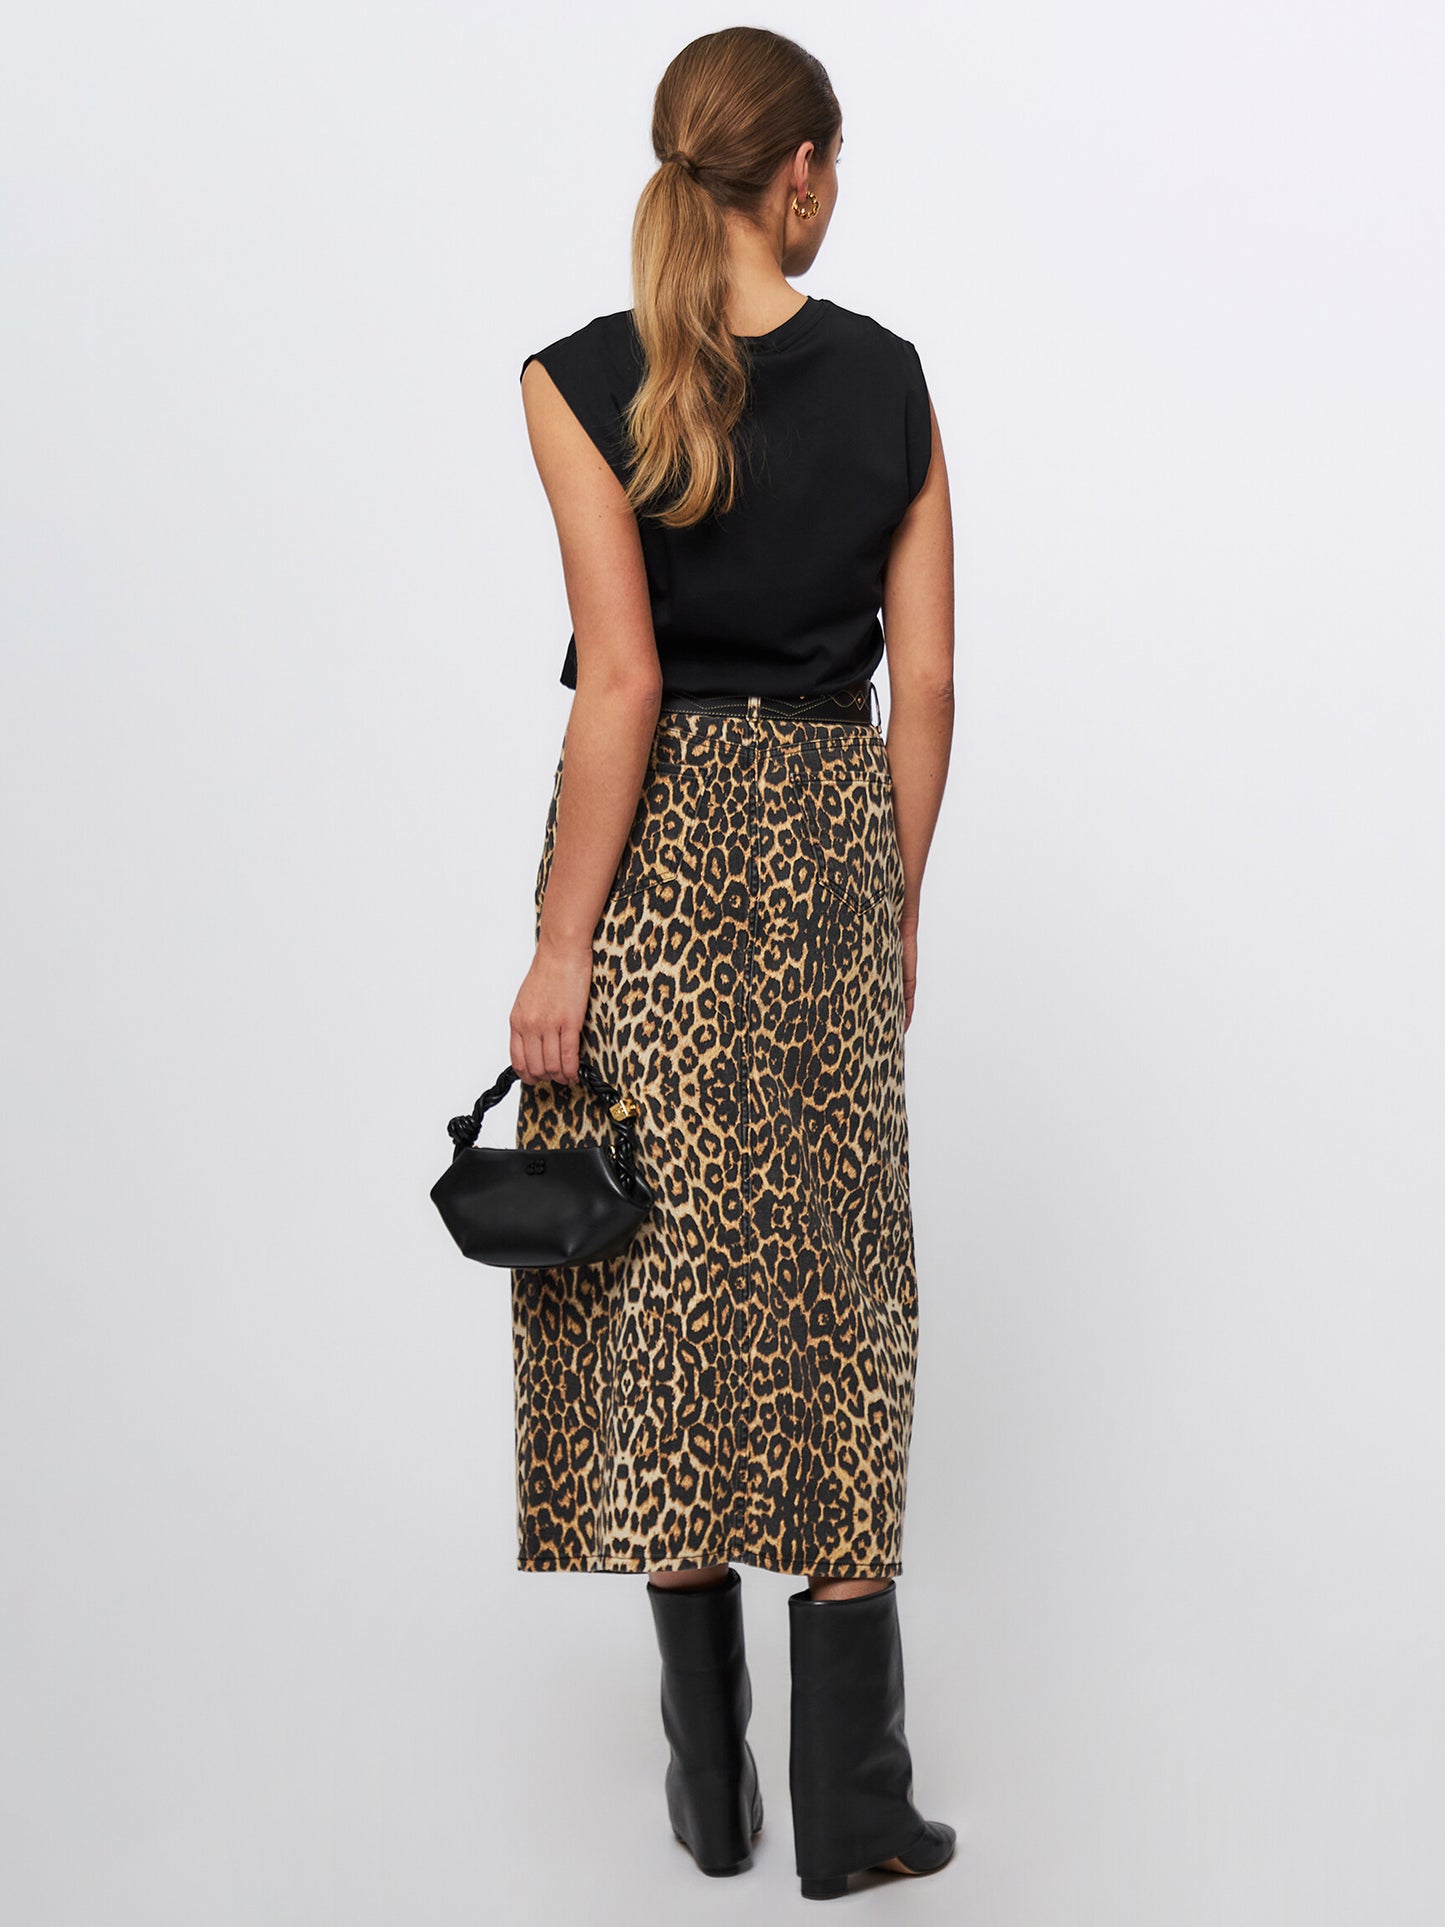 Leopard Print Denim Skirt